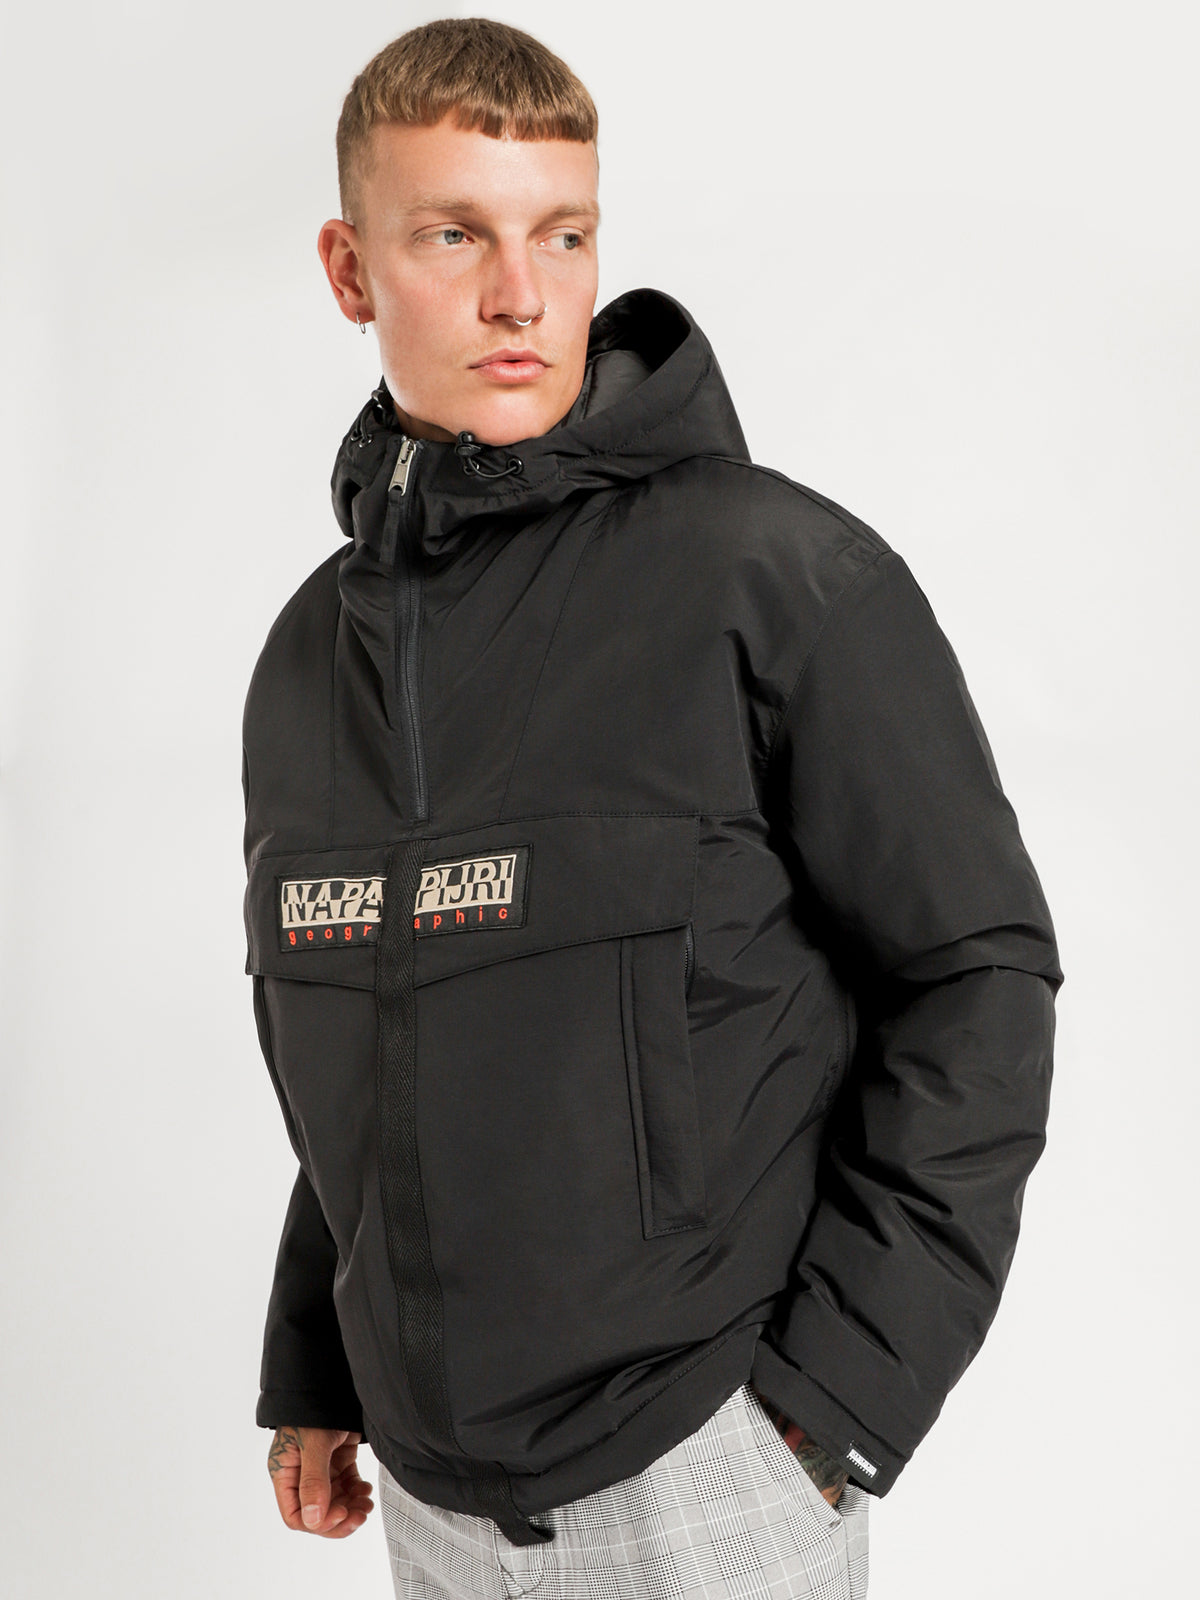 Skidoo Creater Popover Hooded Jacket in Black